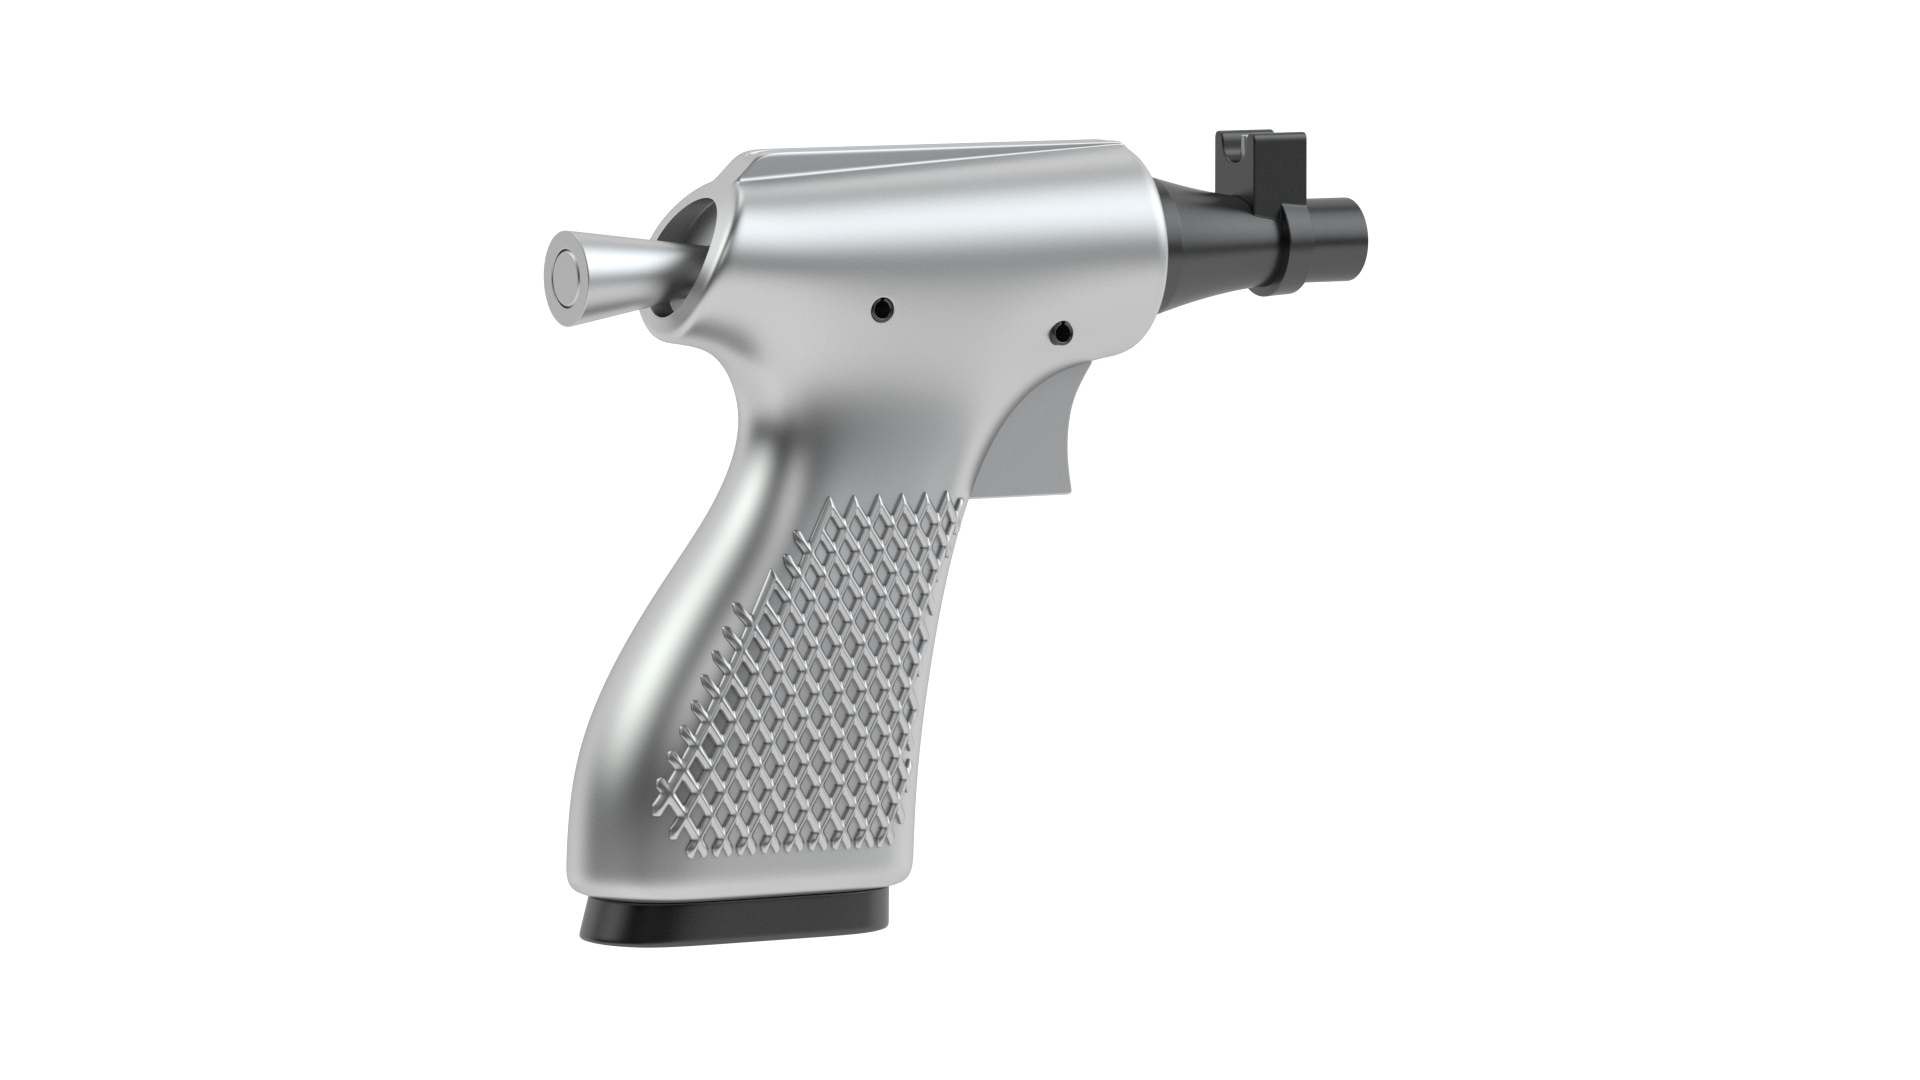 deer gun 3D model https://p.turbosquid.com/ts-thumb/j0/al5NGu/OR/deergun/jpg/1617008571/1920x1080/turn_fit_q99/a3c723e4ae58d6754a3574c743b6fa9841644849/deergun-1.jpg